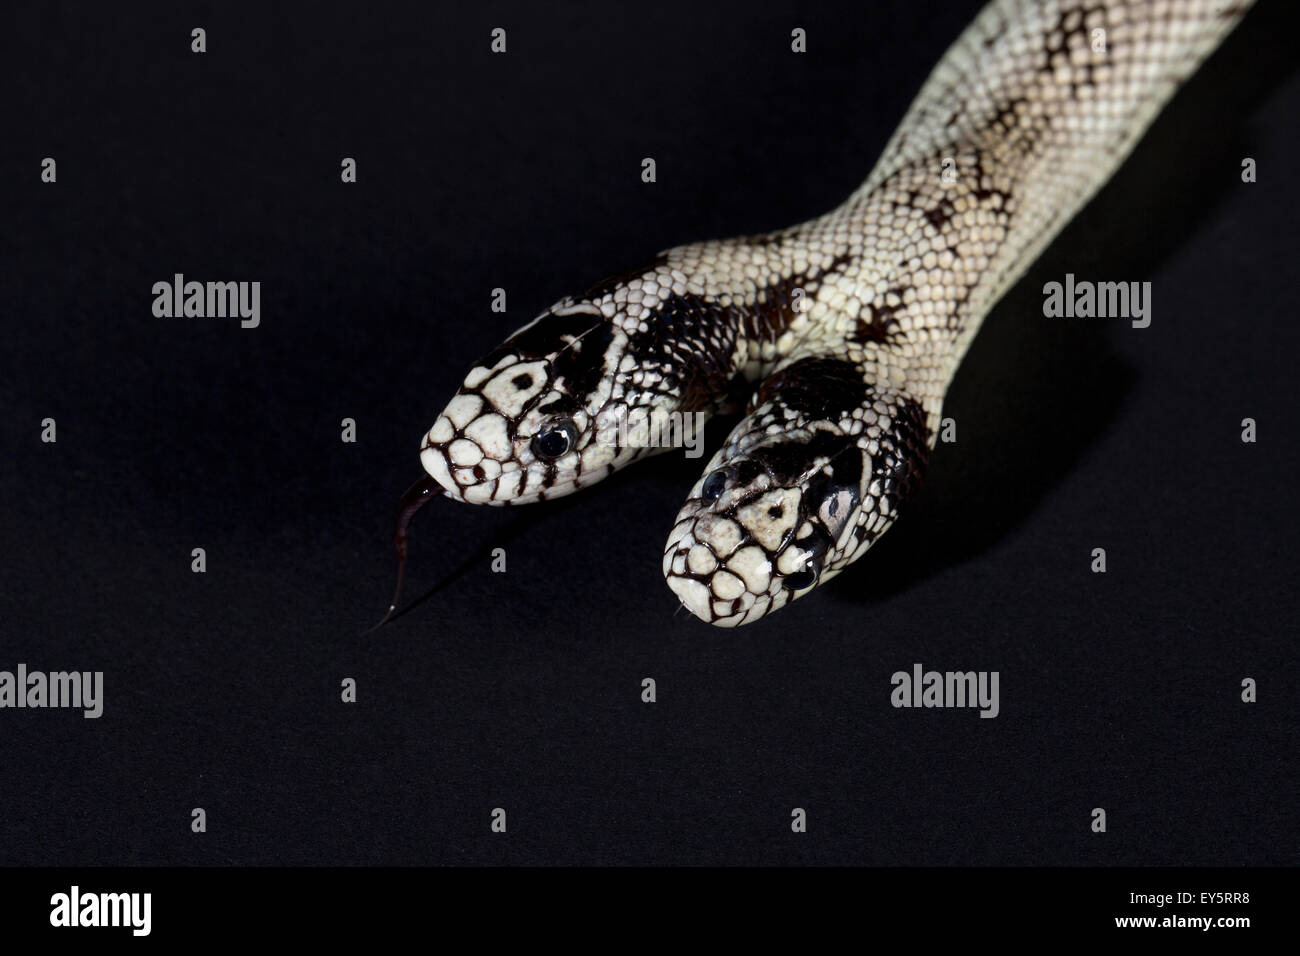 Two-headed California king snake on black background Stock Photo